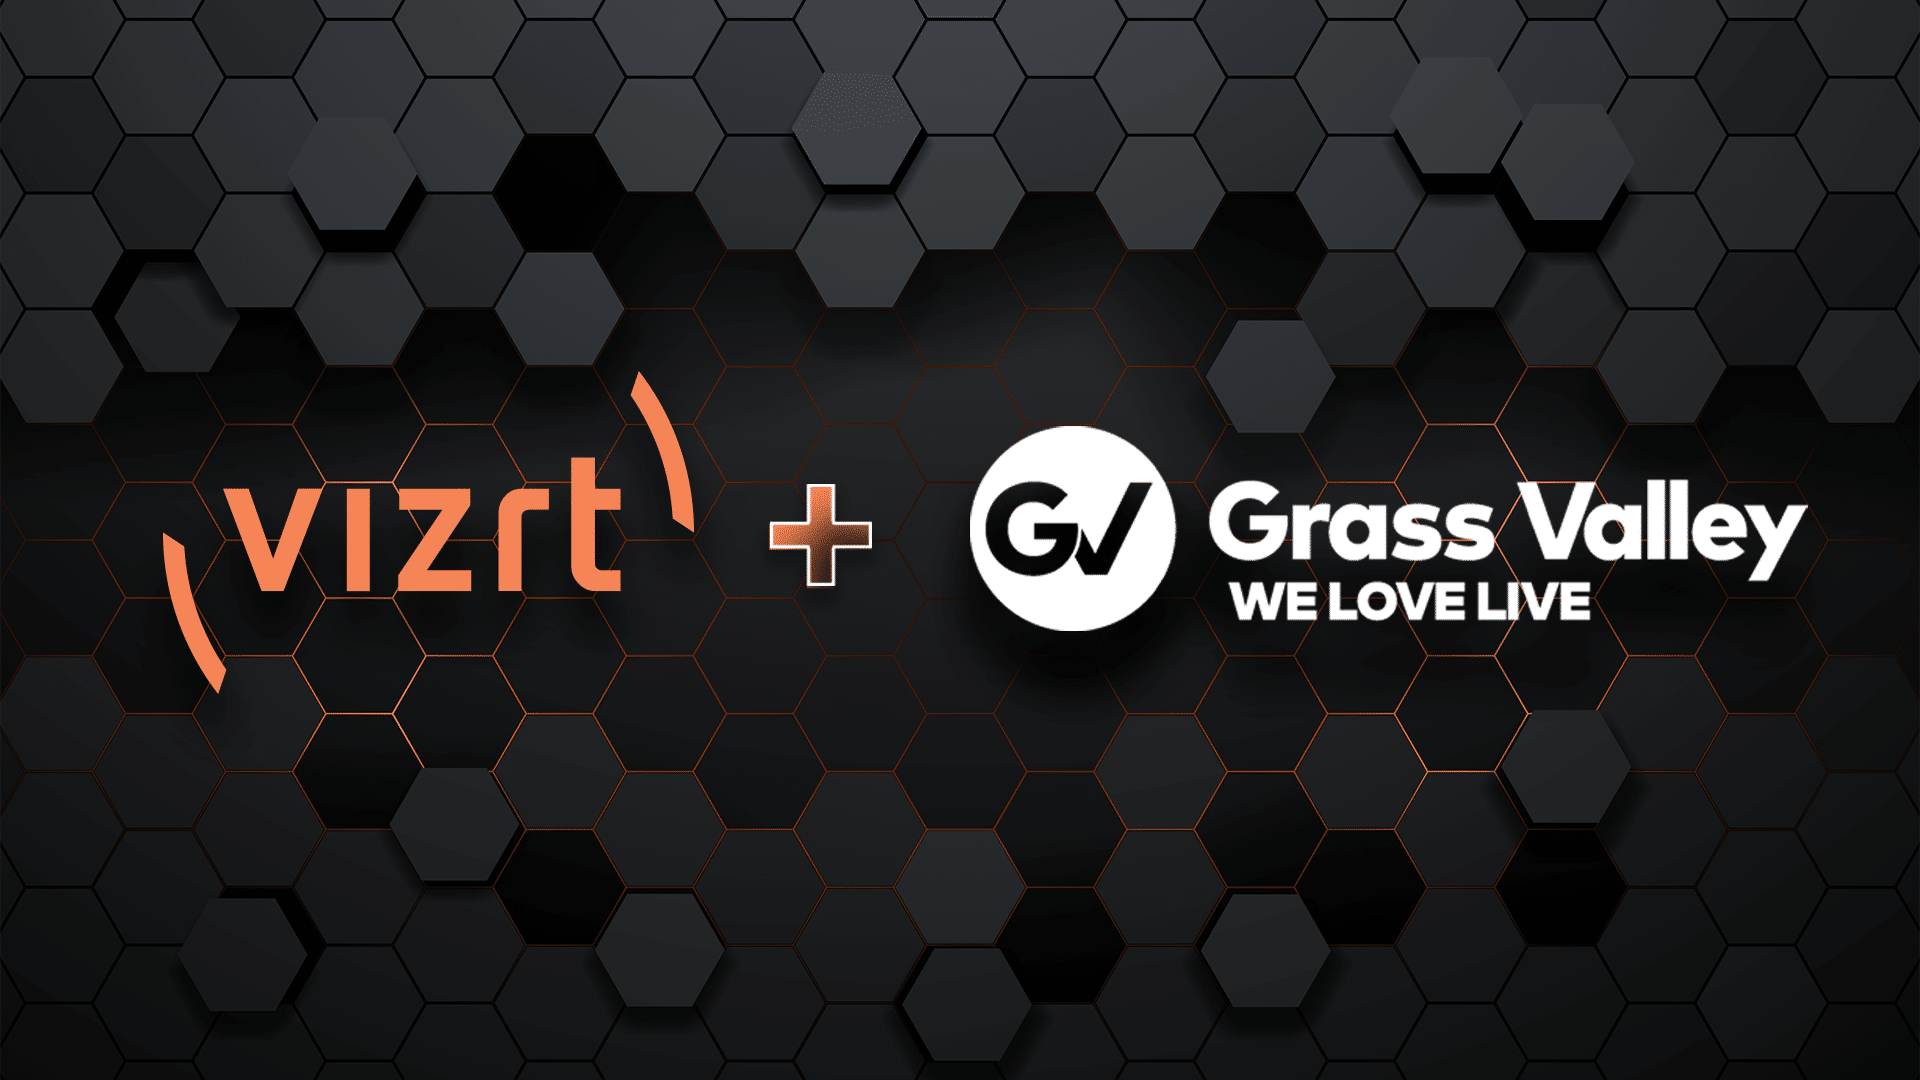 Premium Vizrt graphics become available through GV AMPP system